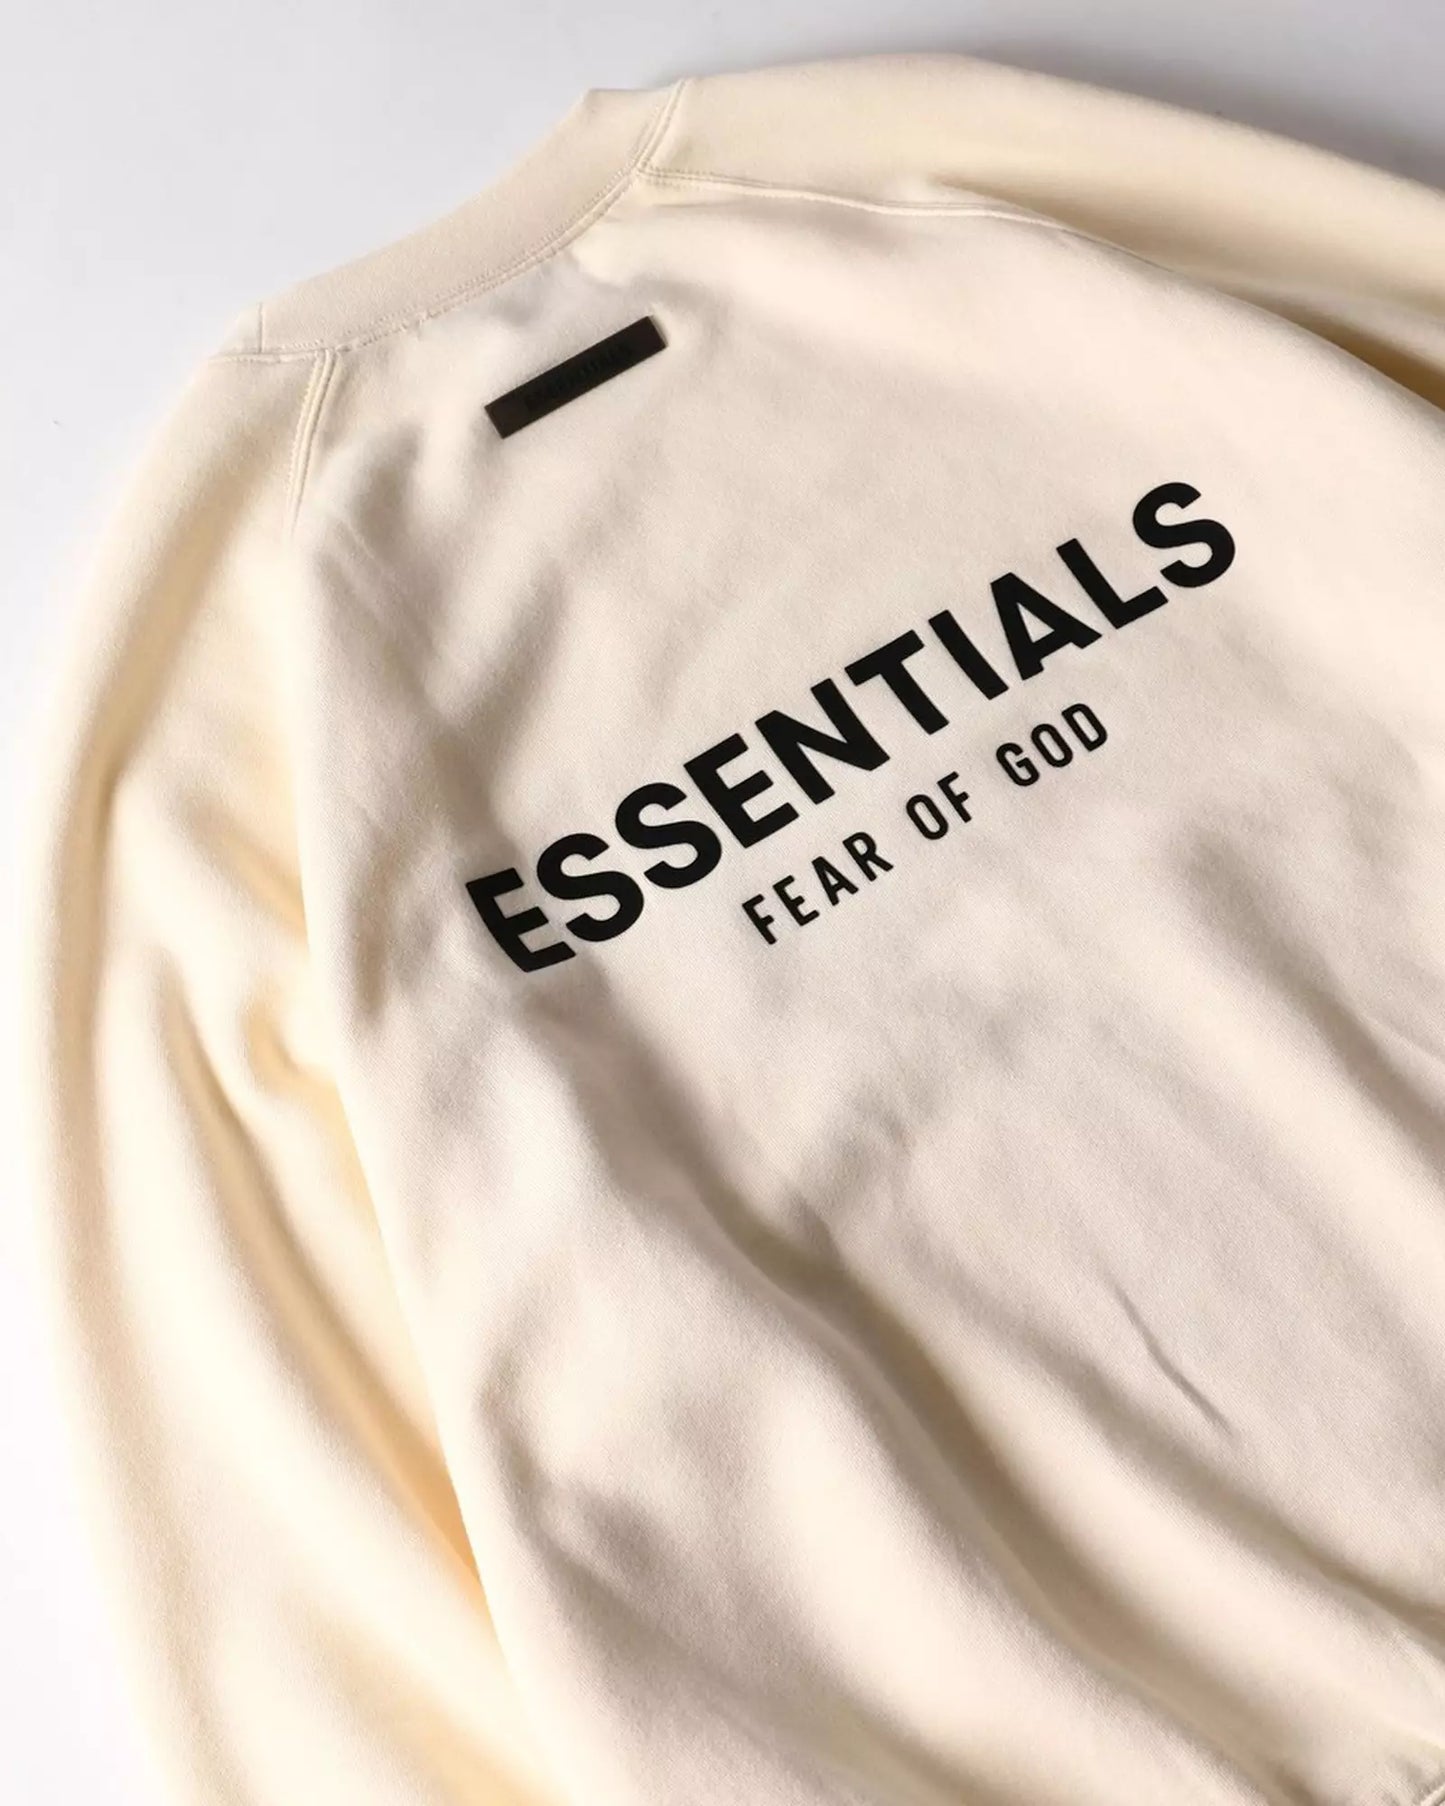 Essentials SS21 Pullover Crewneck // Sweater